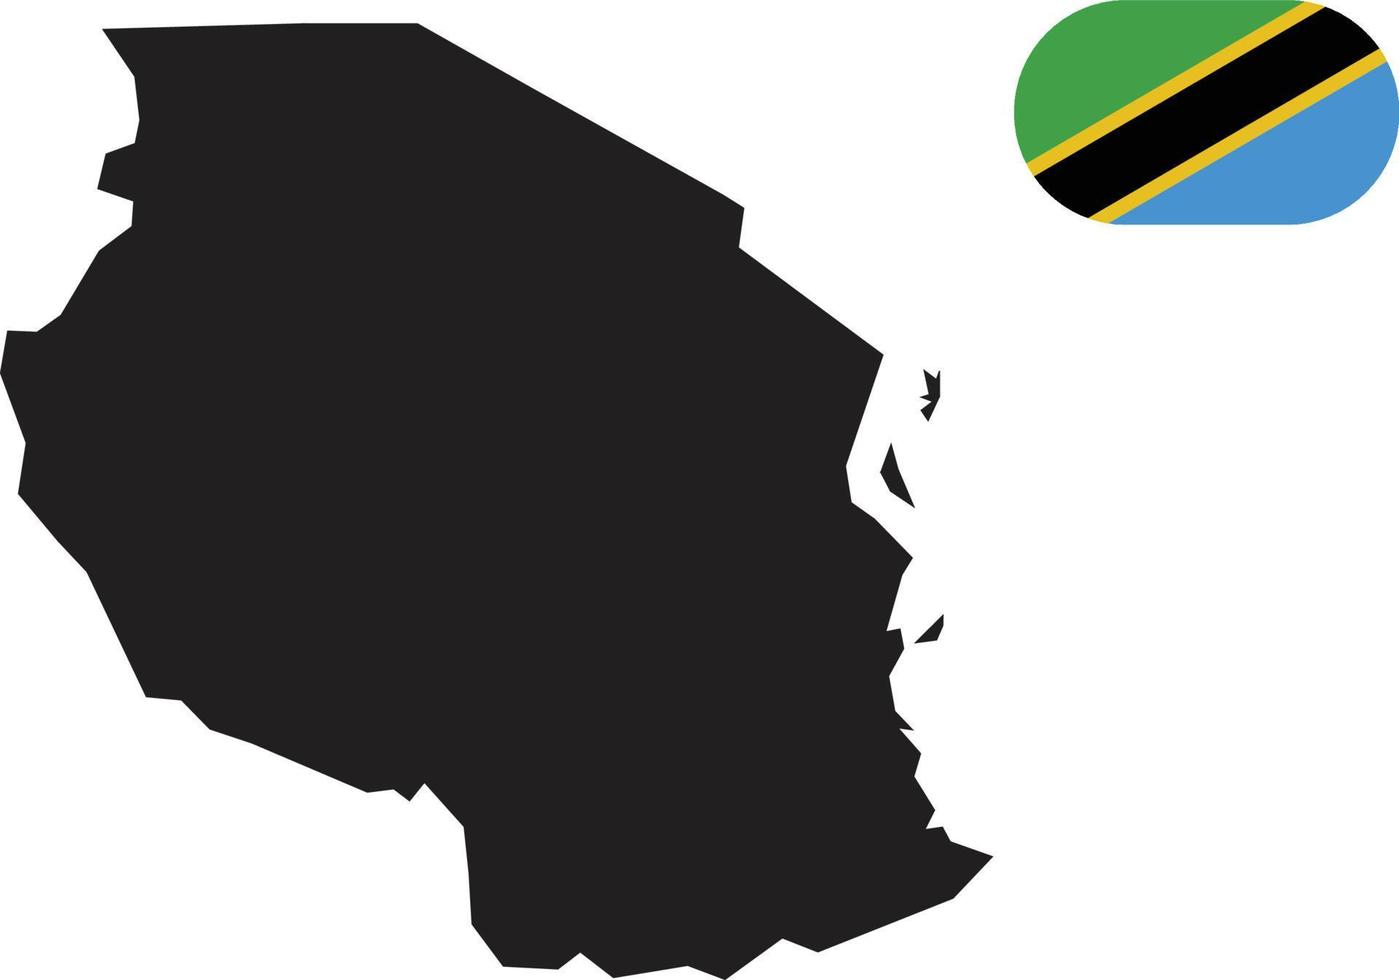 Karte und Flagge von Tansania vektor